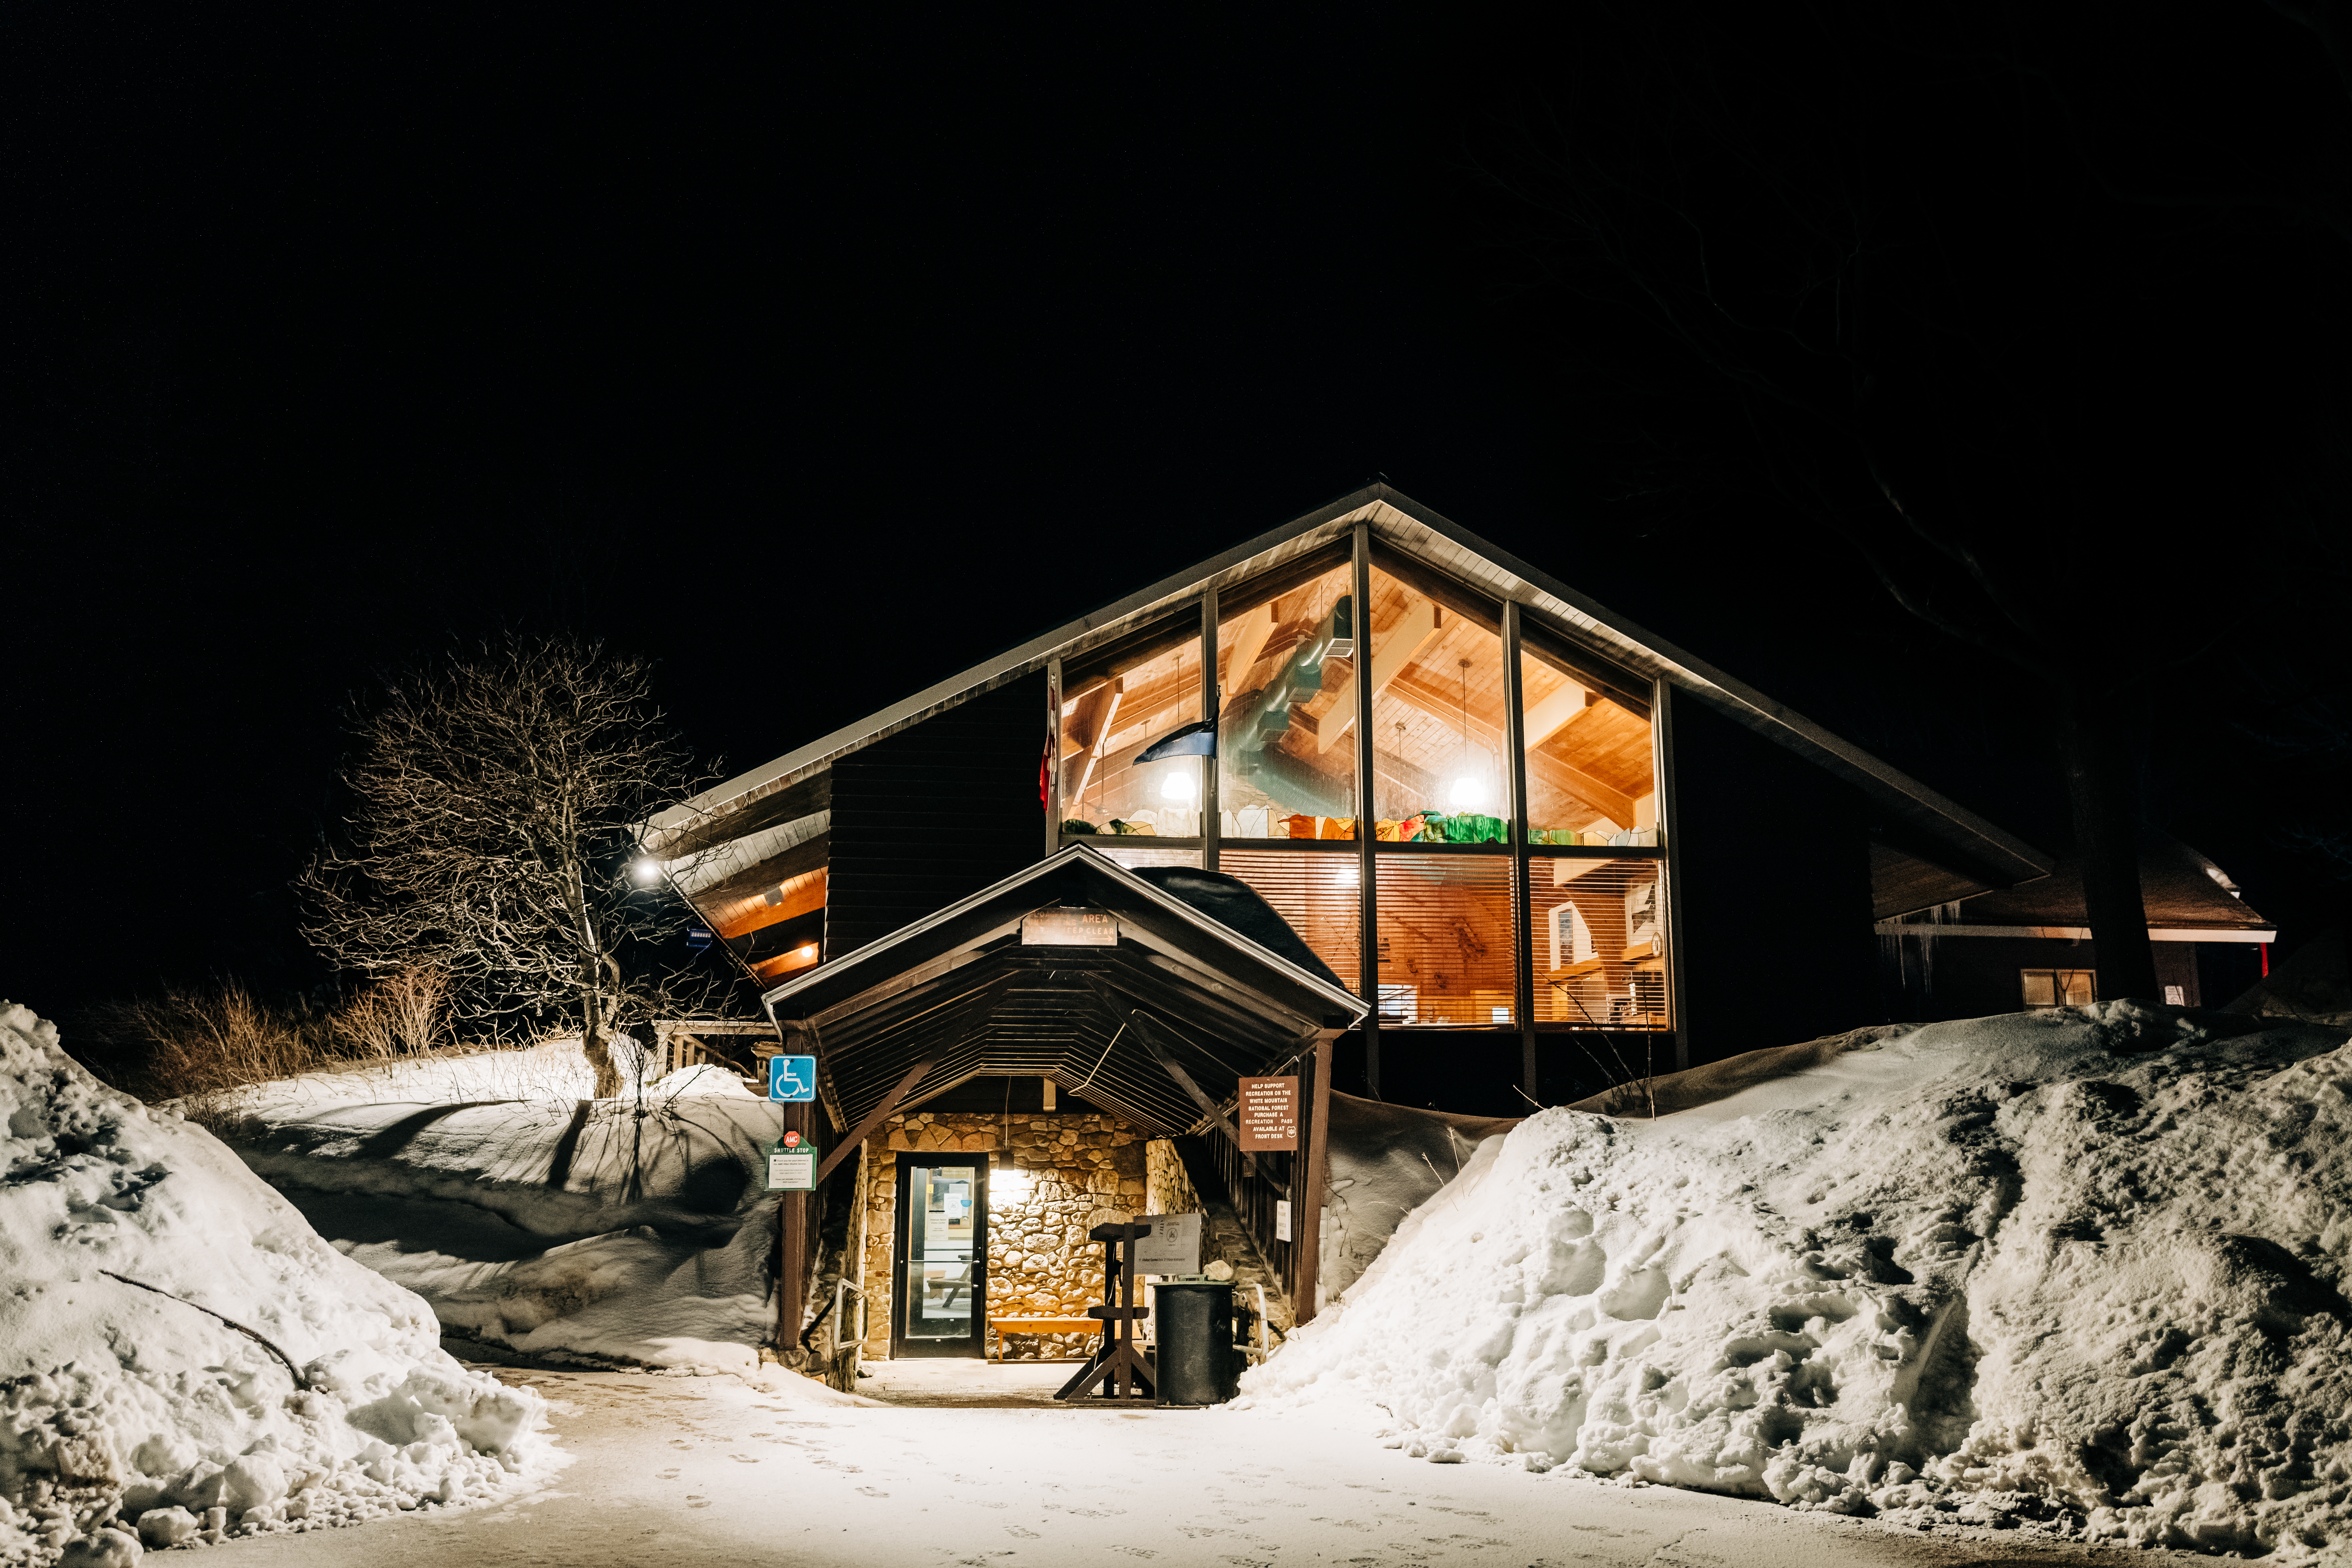  AMC Joe Dodge Lodge, Pinkham Notch, White Mountain National Forest, New Hampshire-- Photo by Corey David Photography